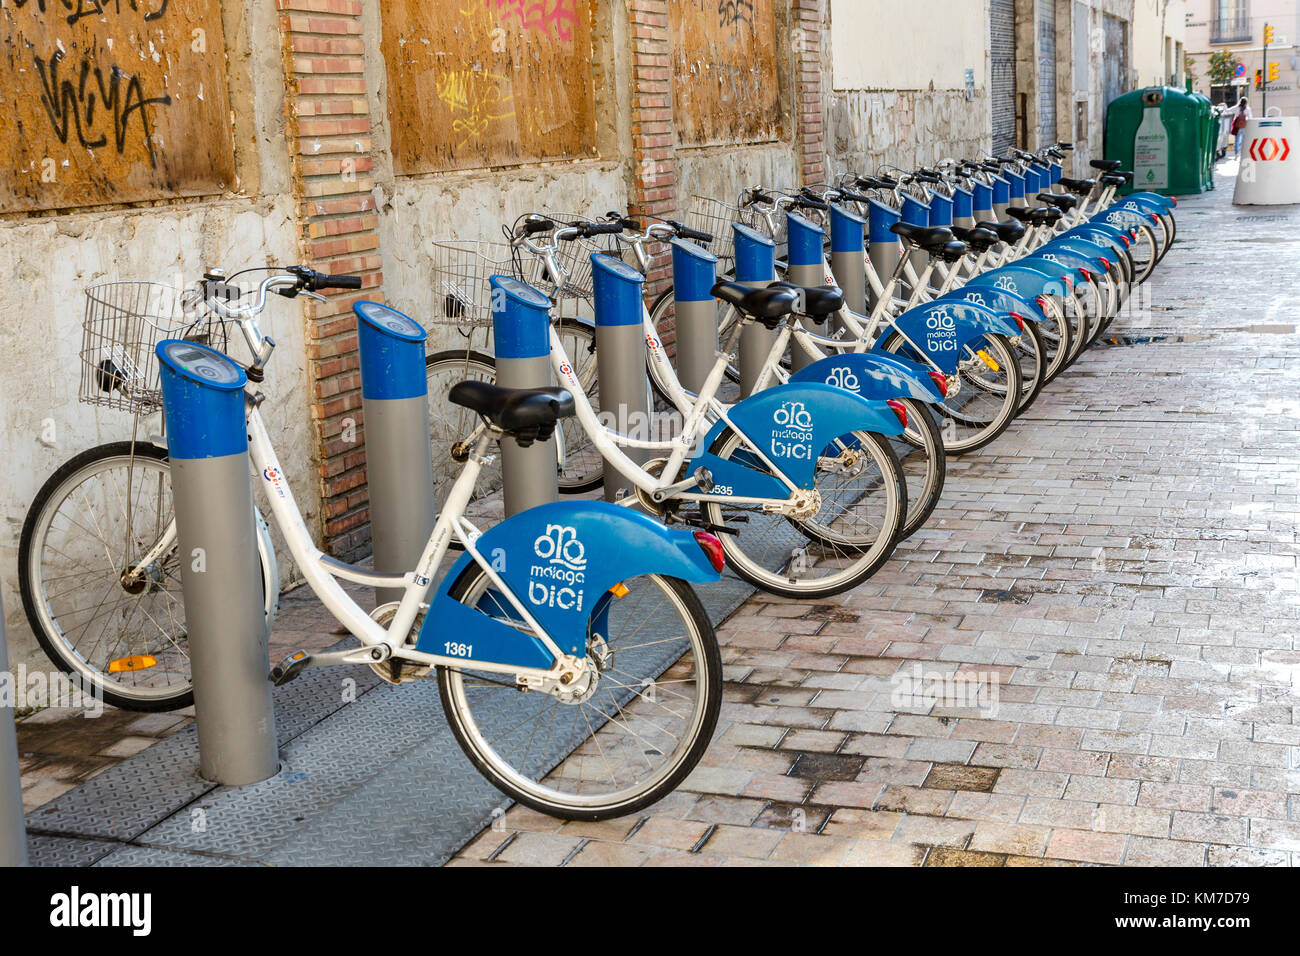 Málaga Bici Bicycle Rental Service, Spain Stock Photo